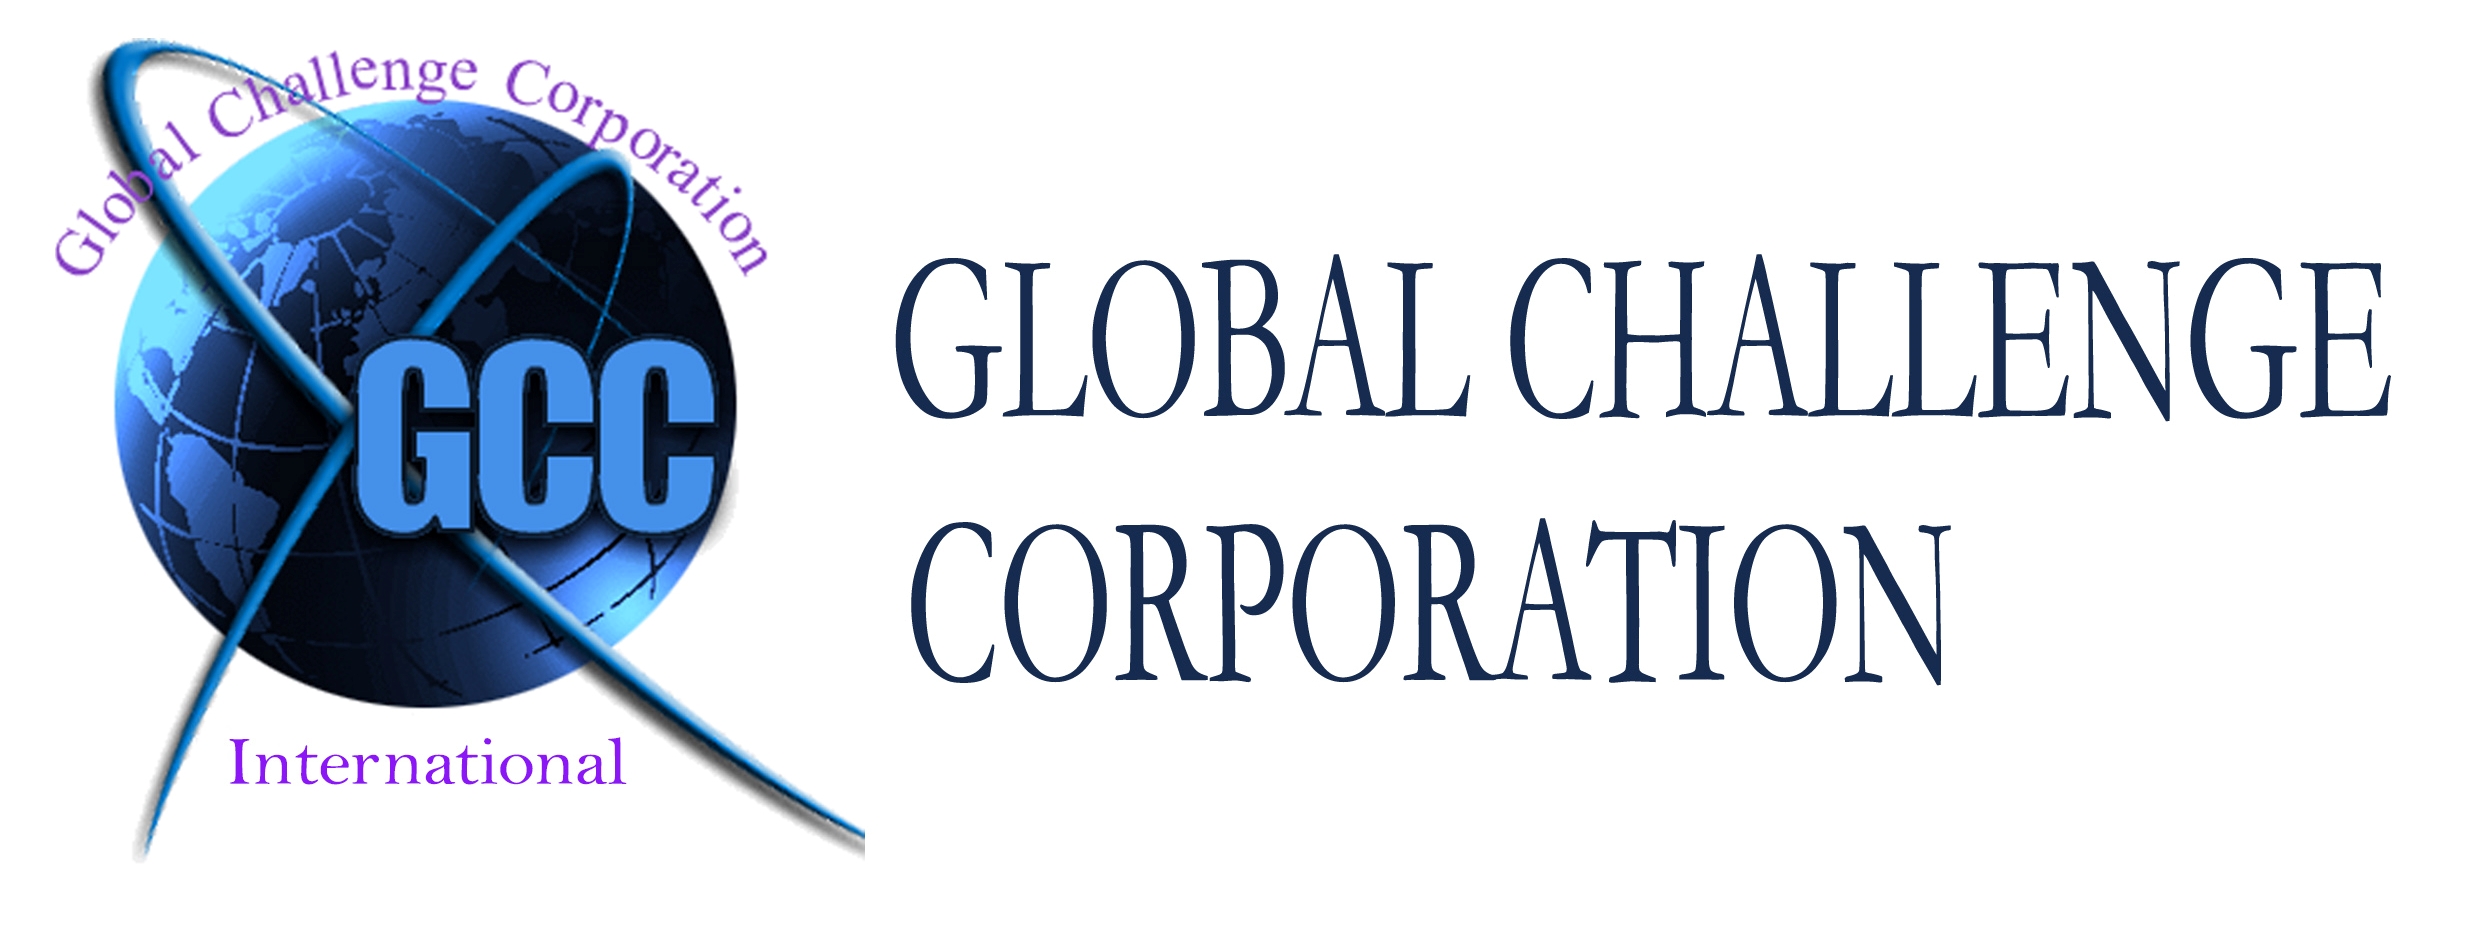 GLOBAL CHALLENGE CORPORATION-CI